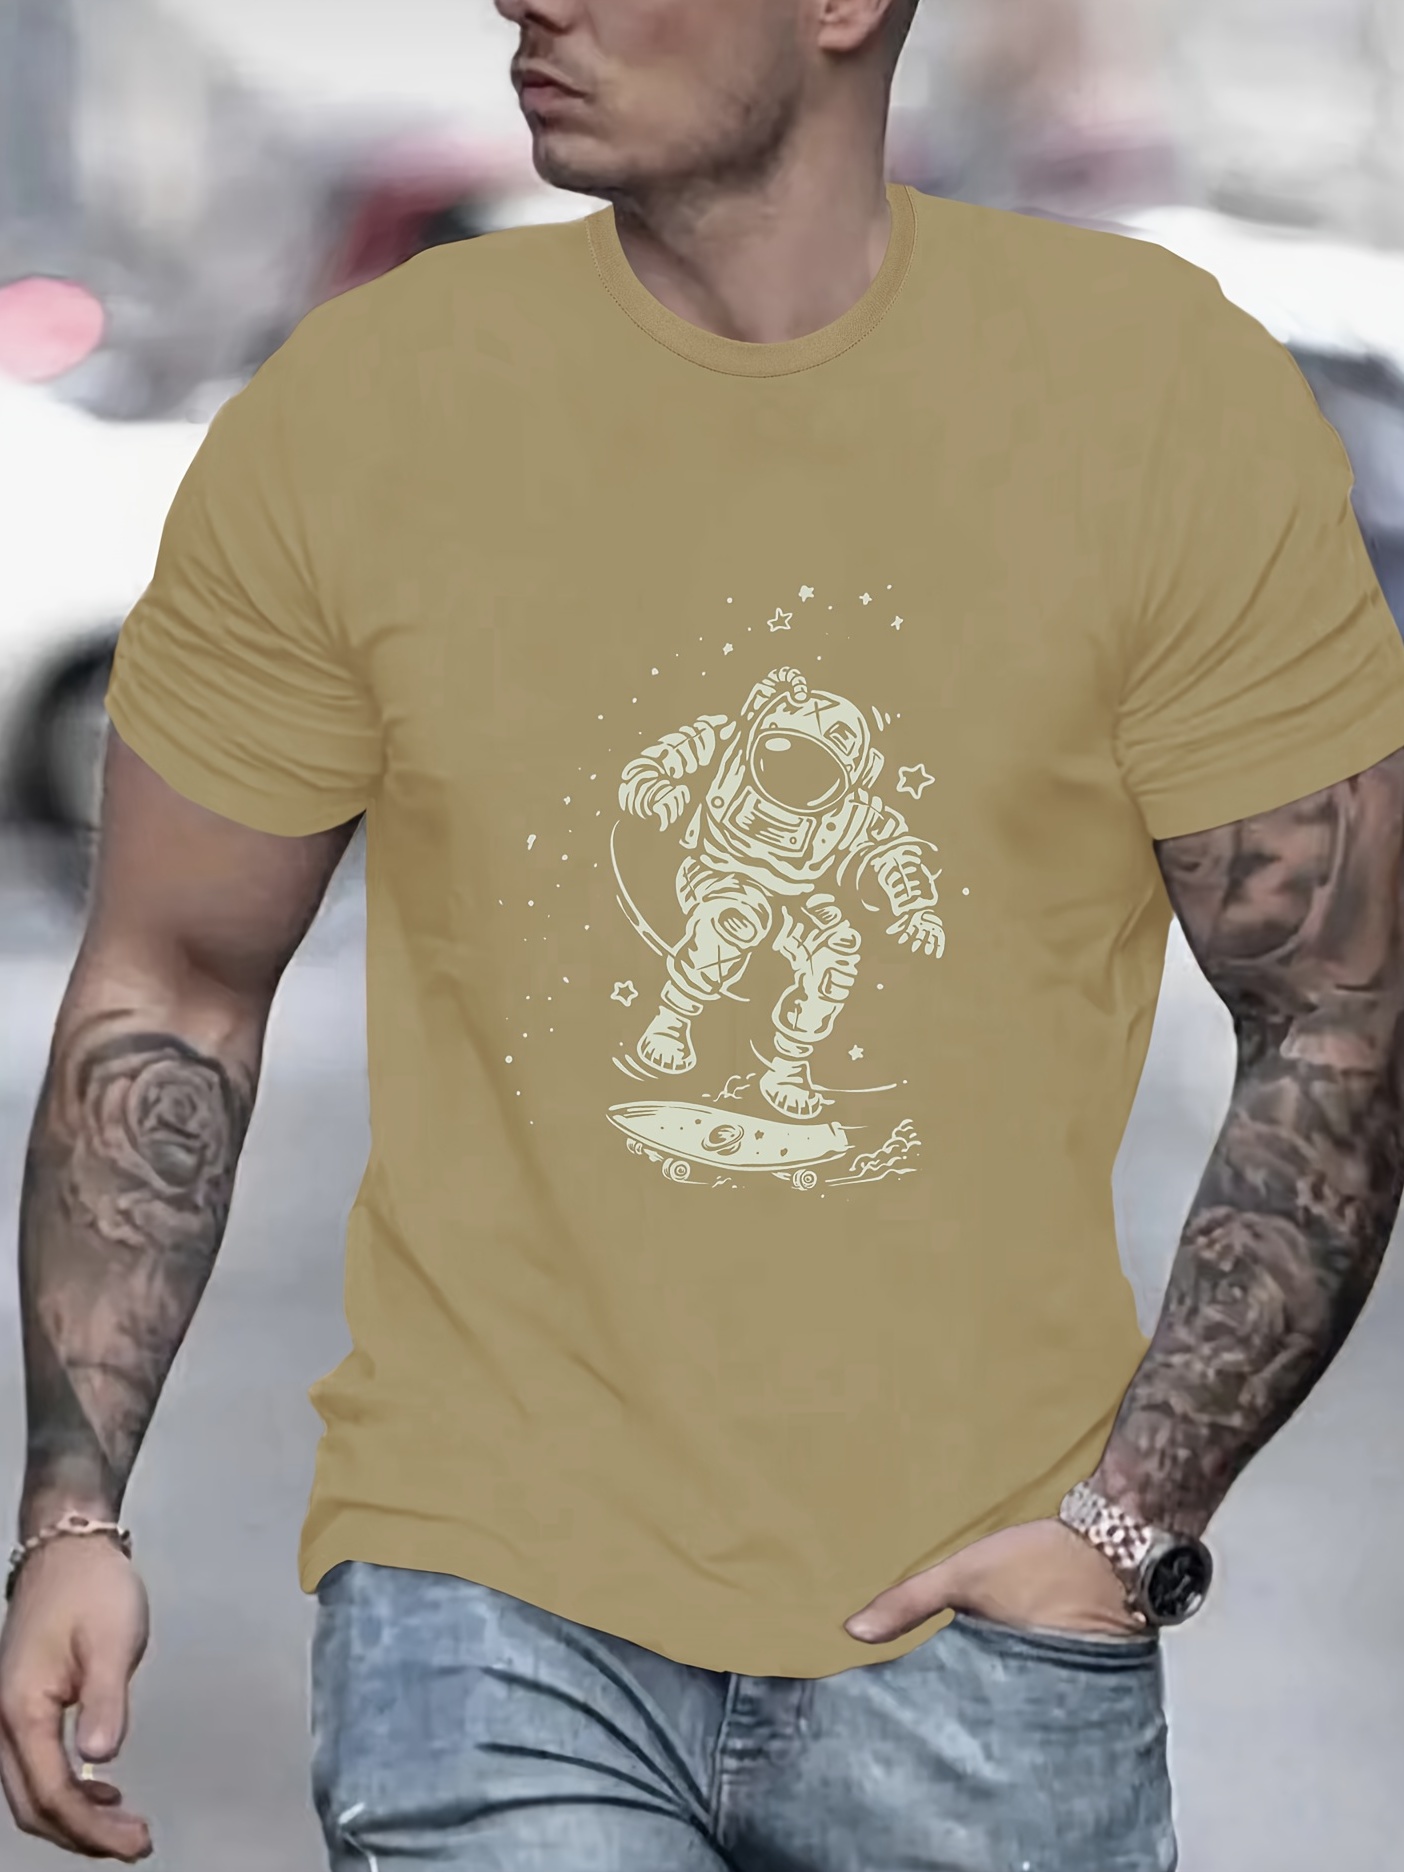 Tee-shirt enfant espace casque astronaute